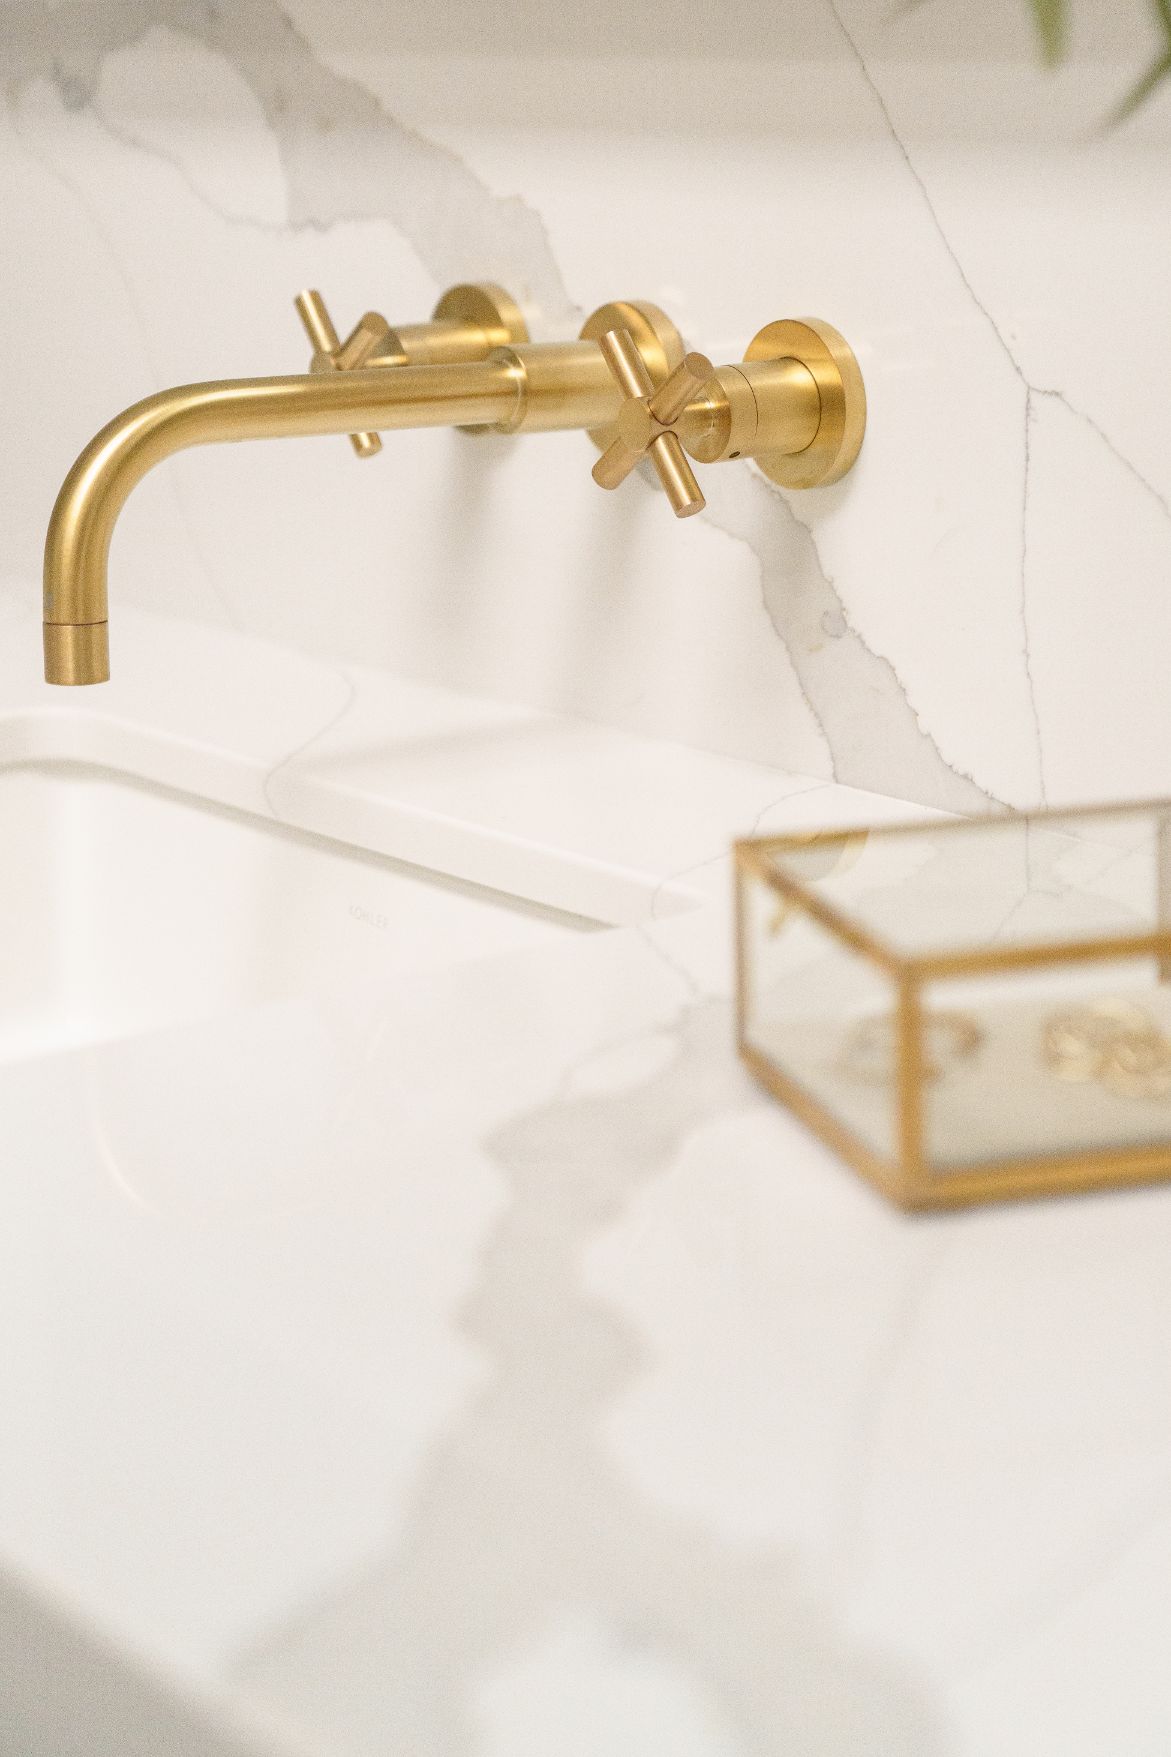 modern tub faucet detail shot